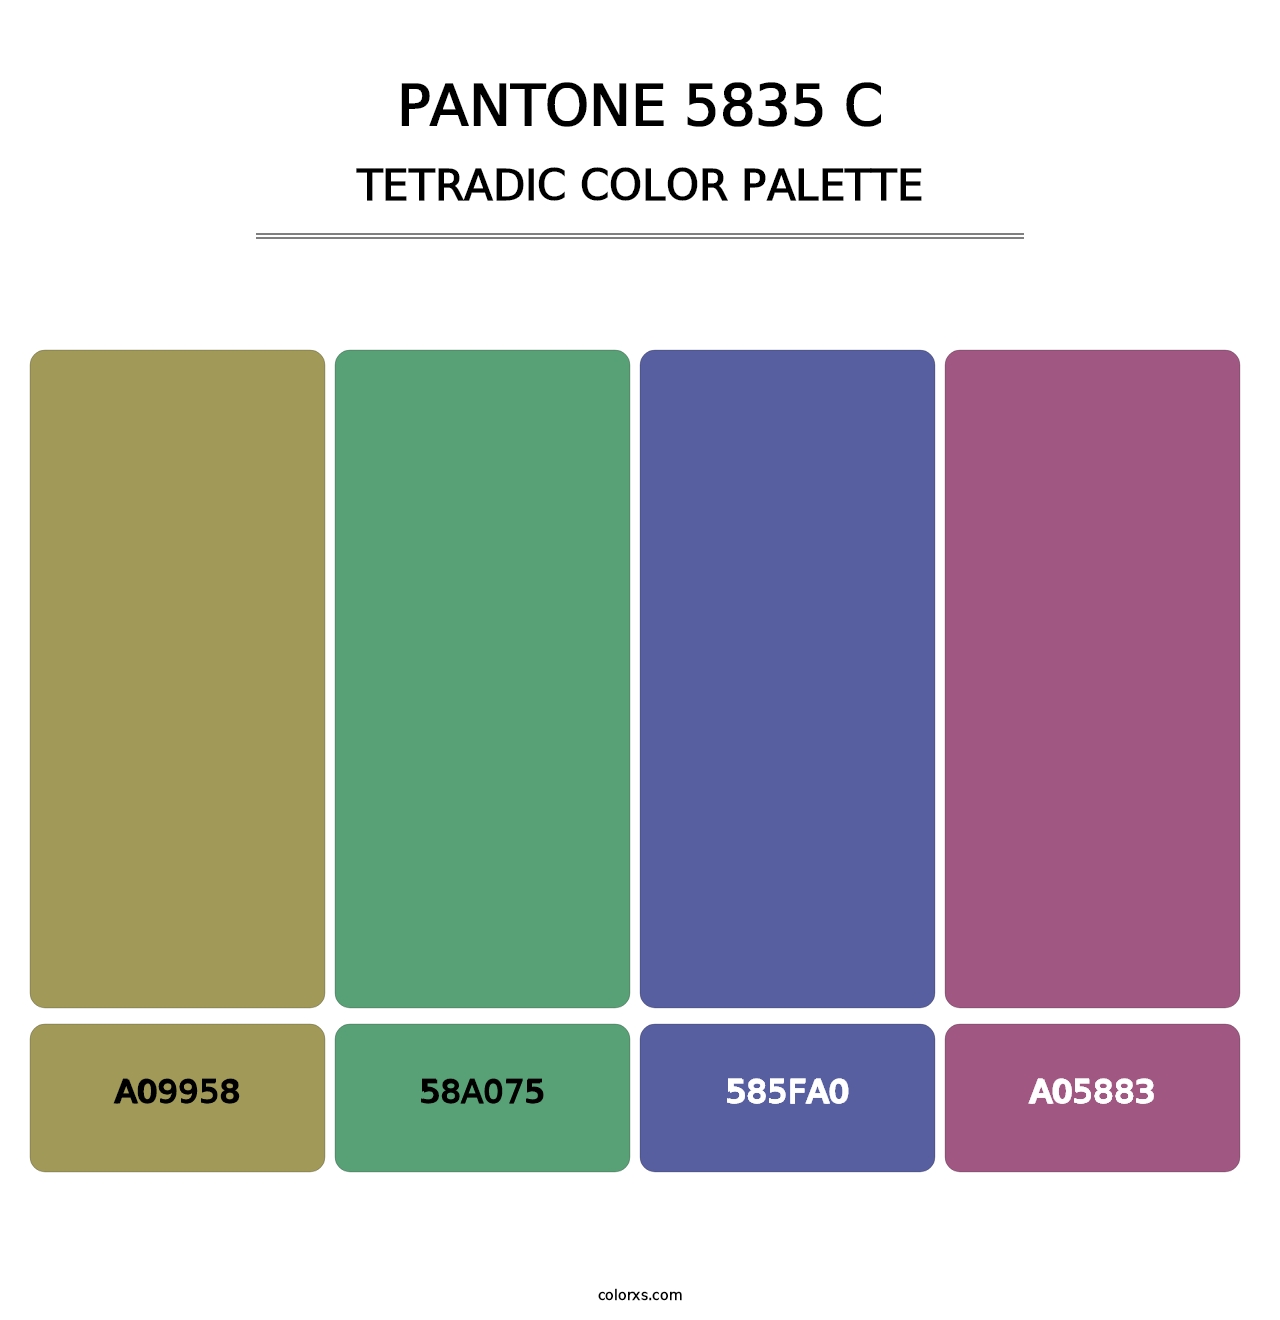 PANTONE 5835 C - Tetradic Color Palette